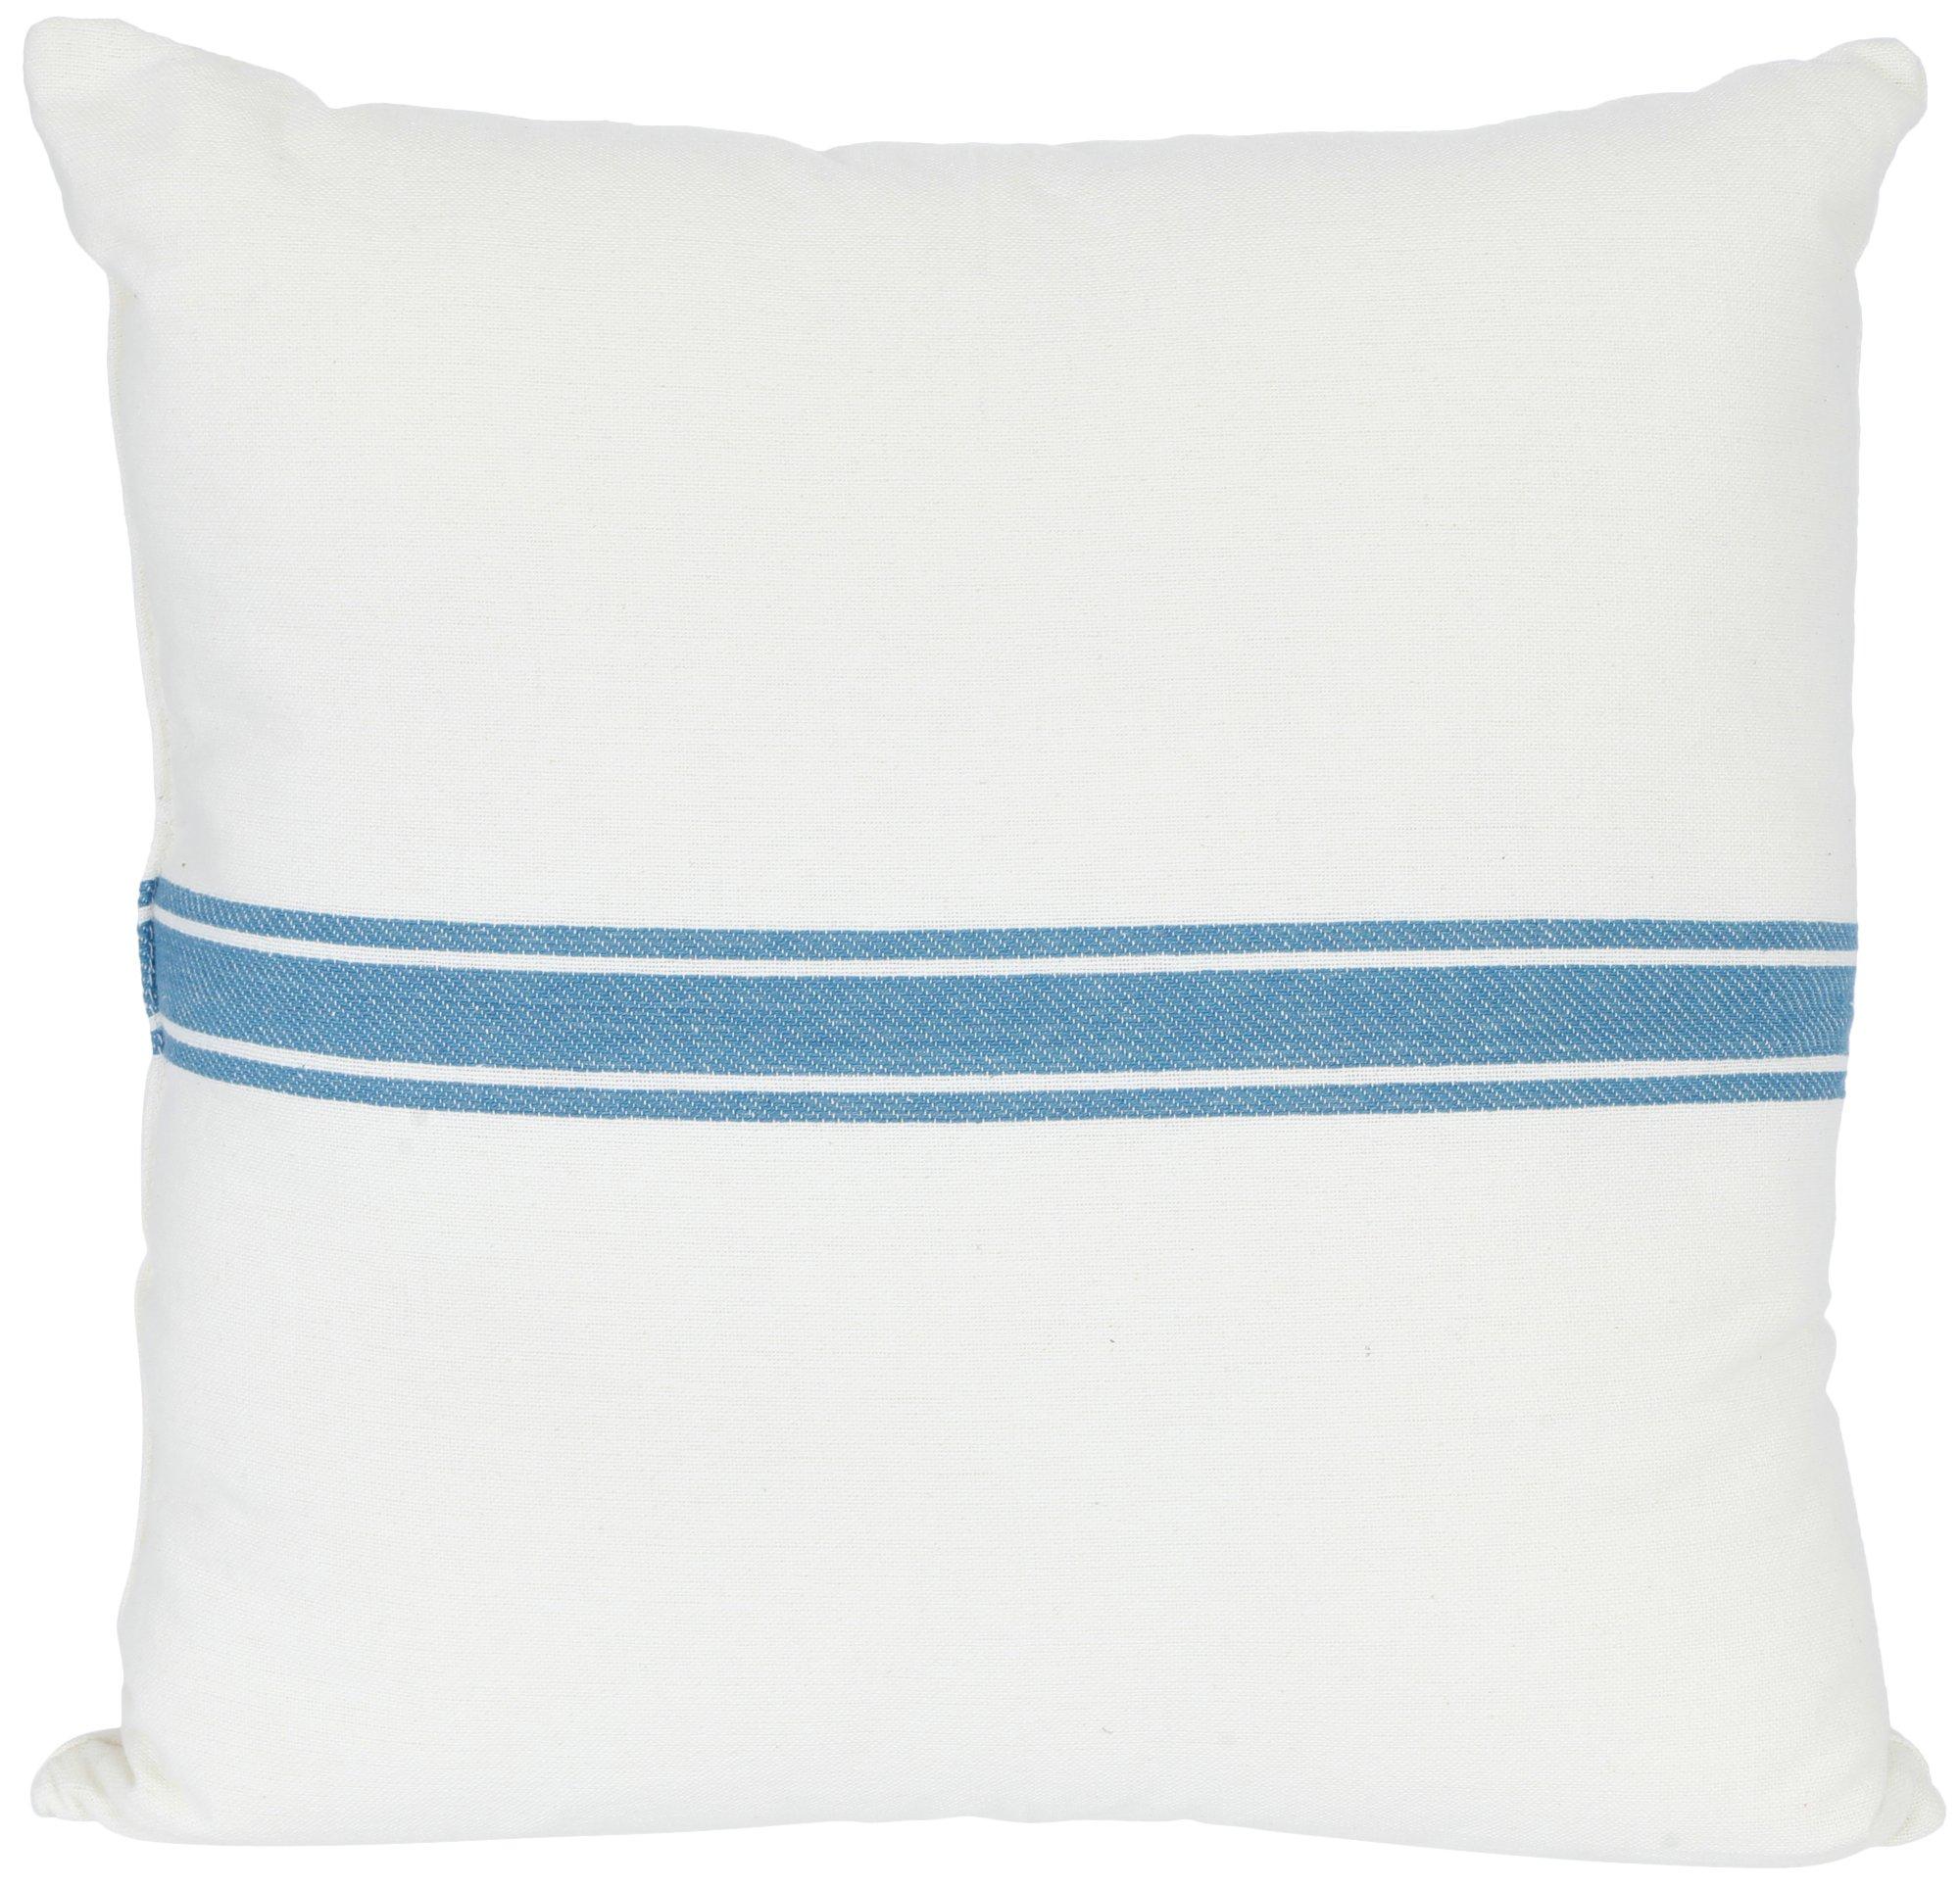 18x18 Decorative Pillow